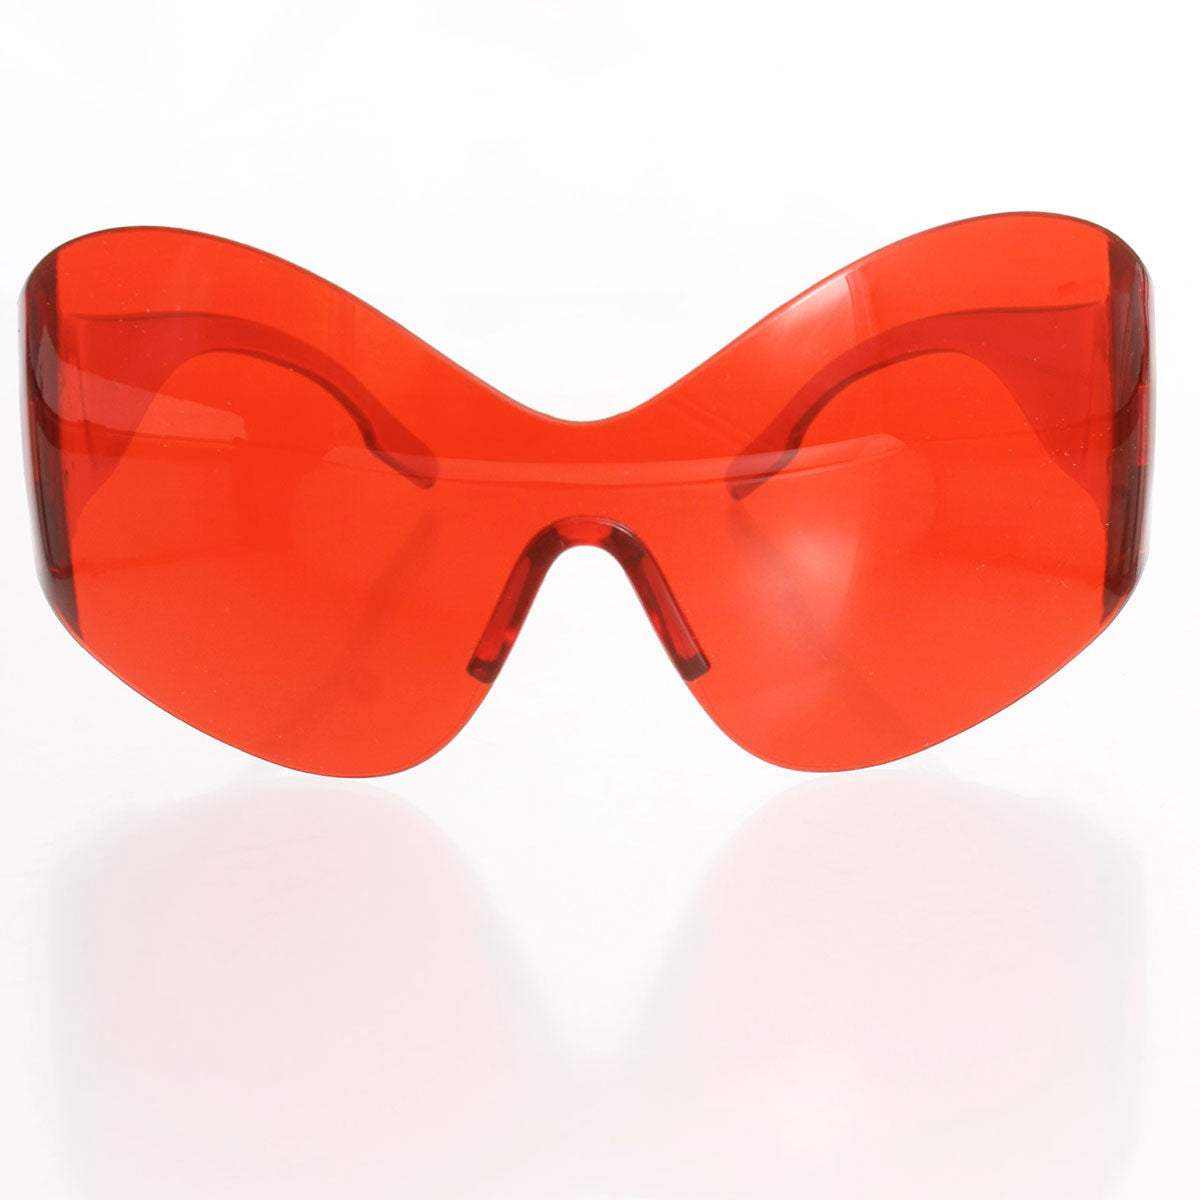 Sunglasses Butterfly Mask Red Eyewear for Women